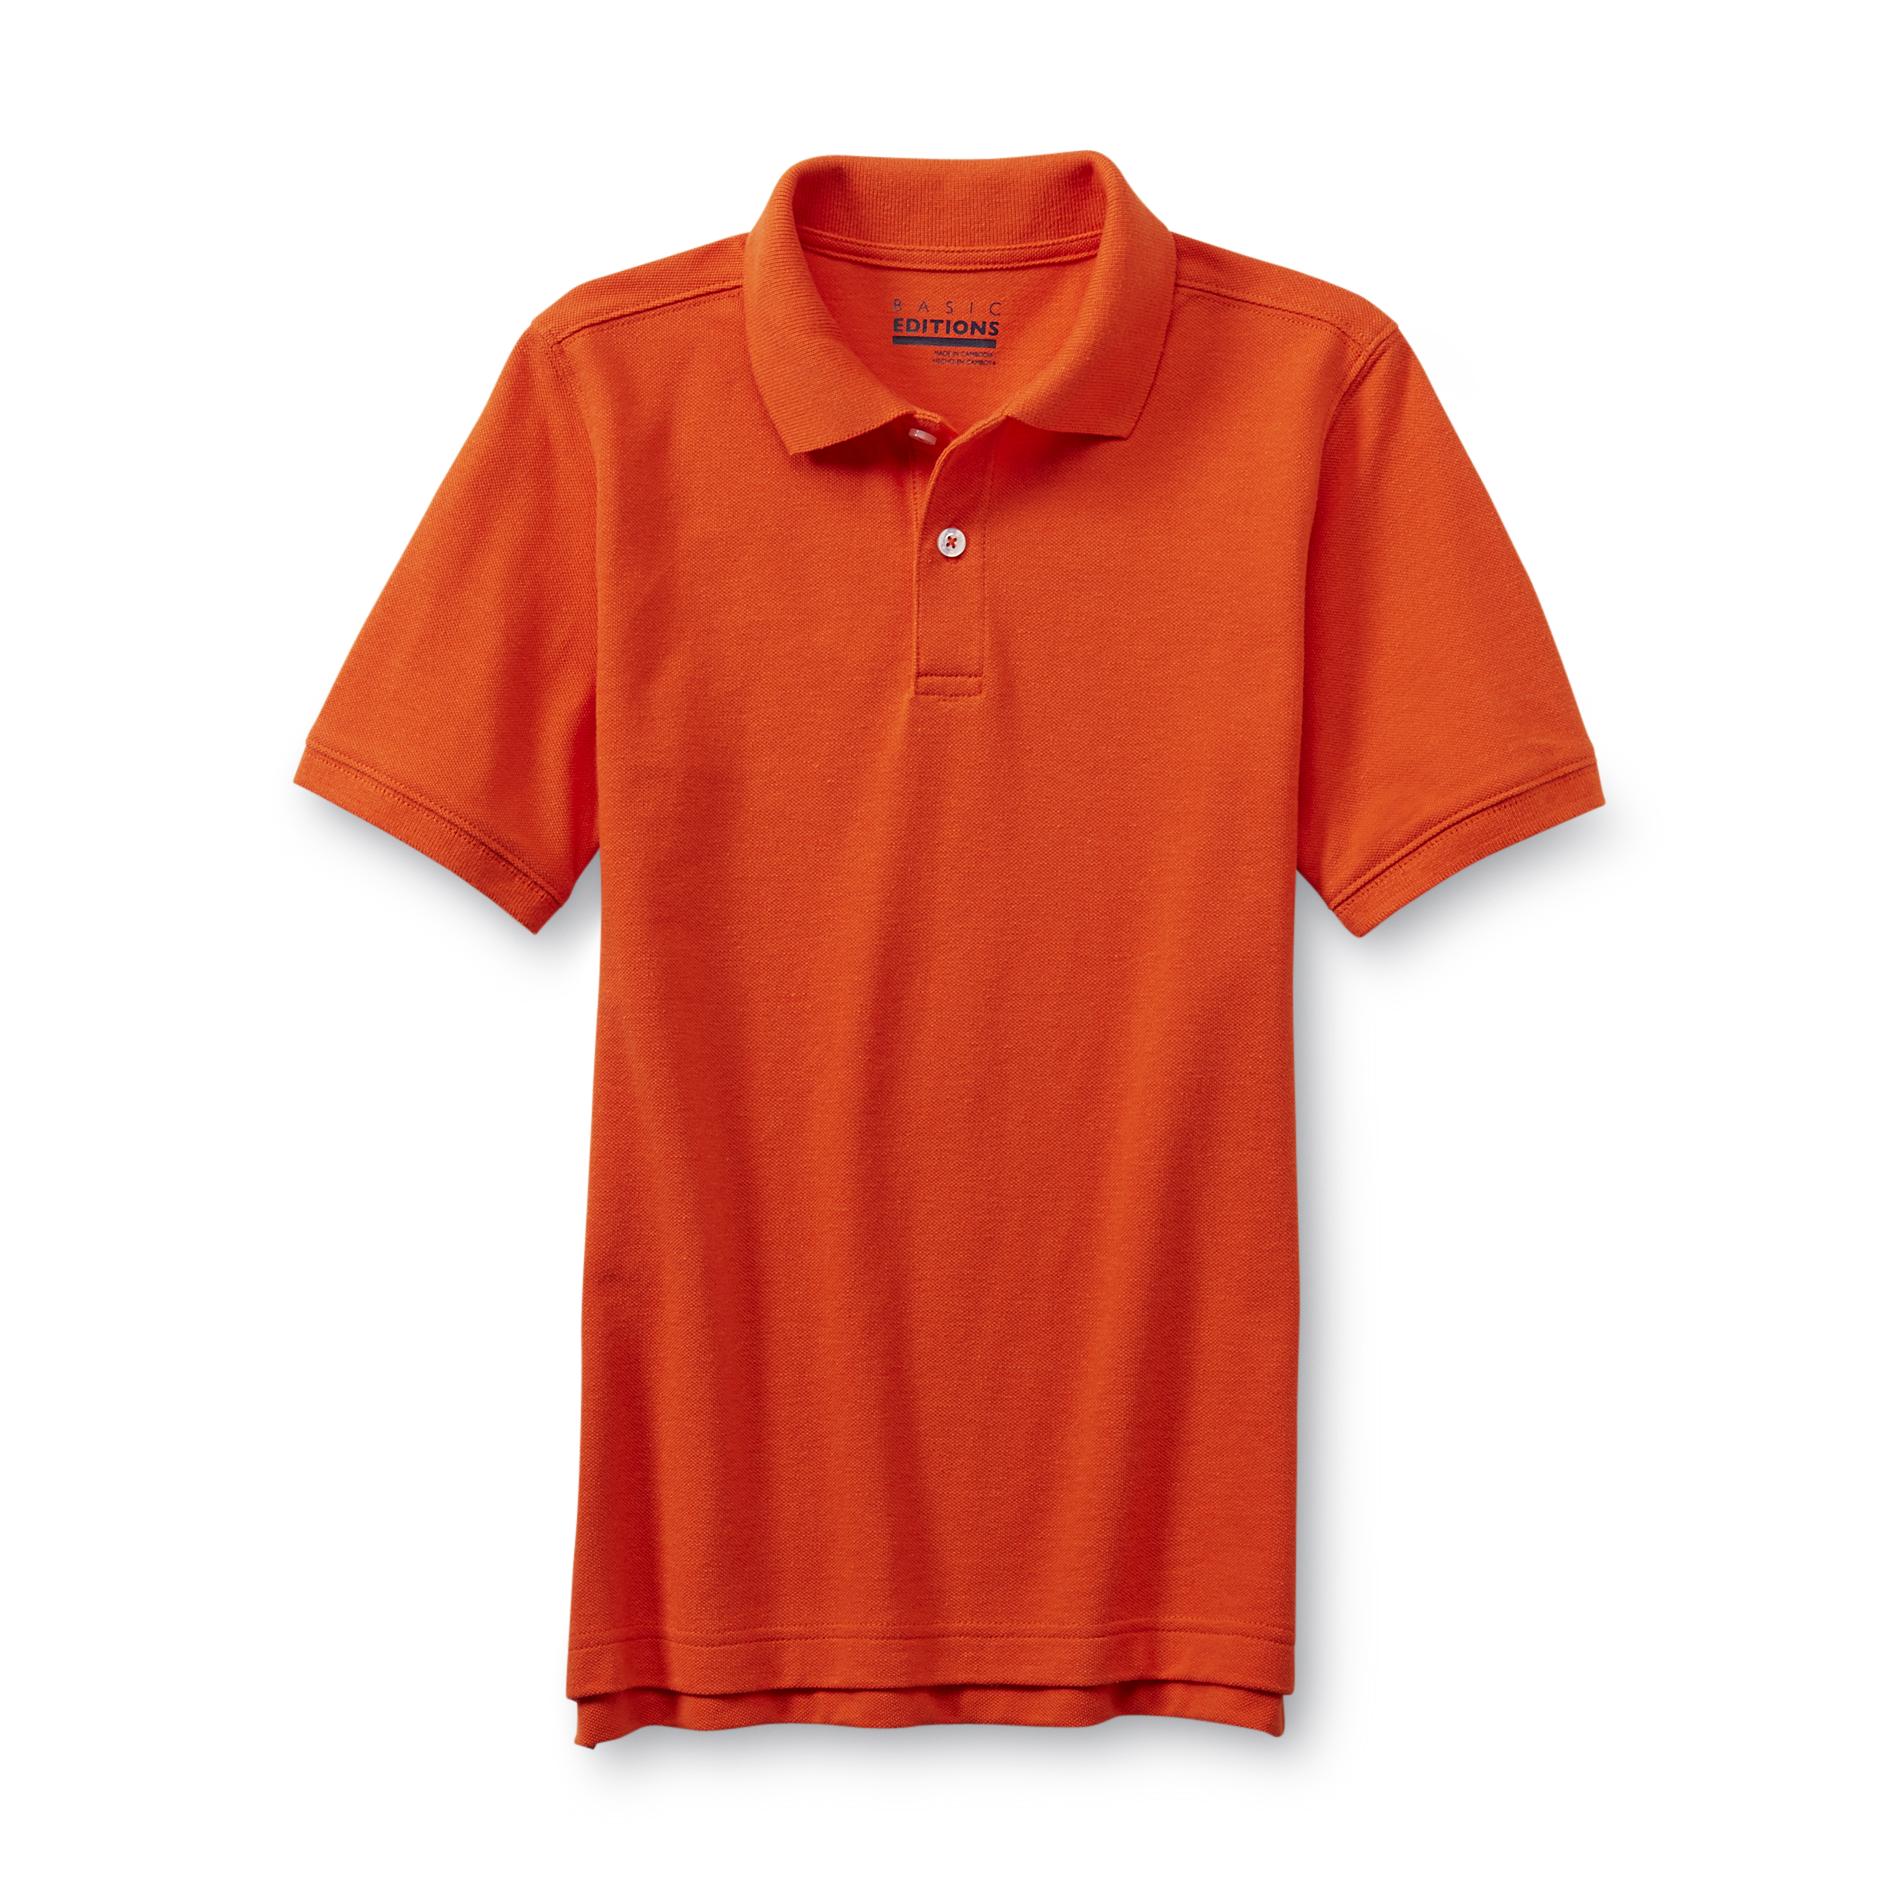 Basic Editions Boy's Polo Shirt